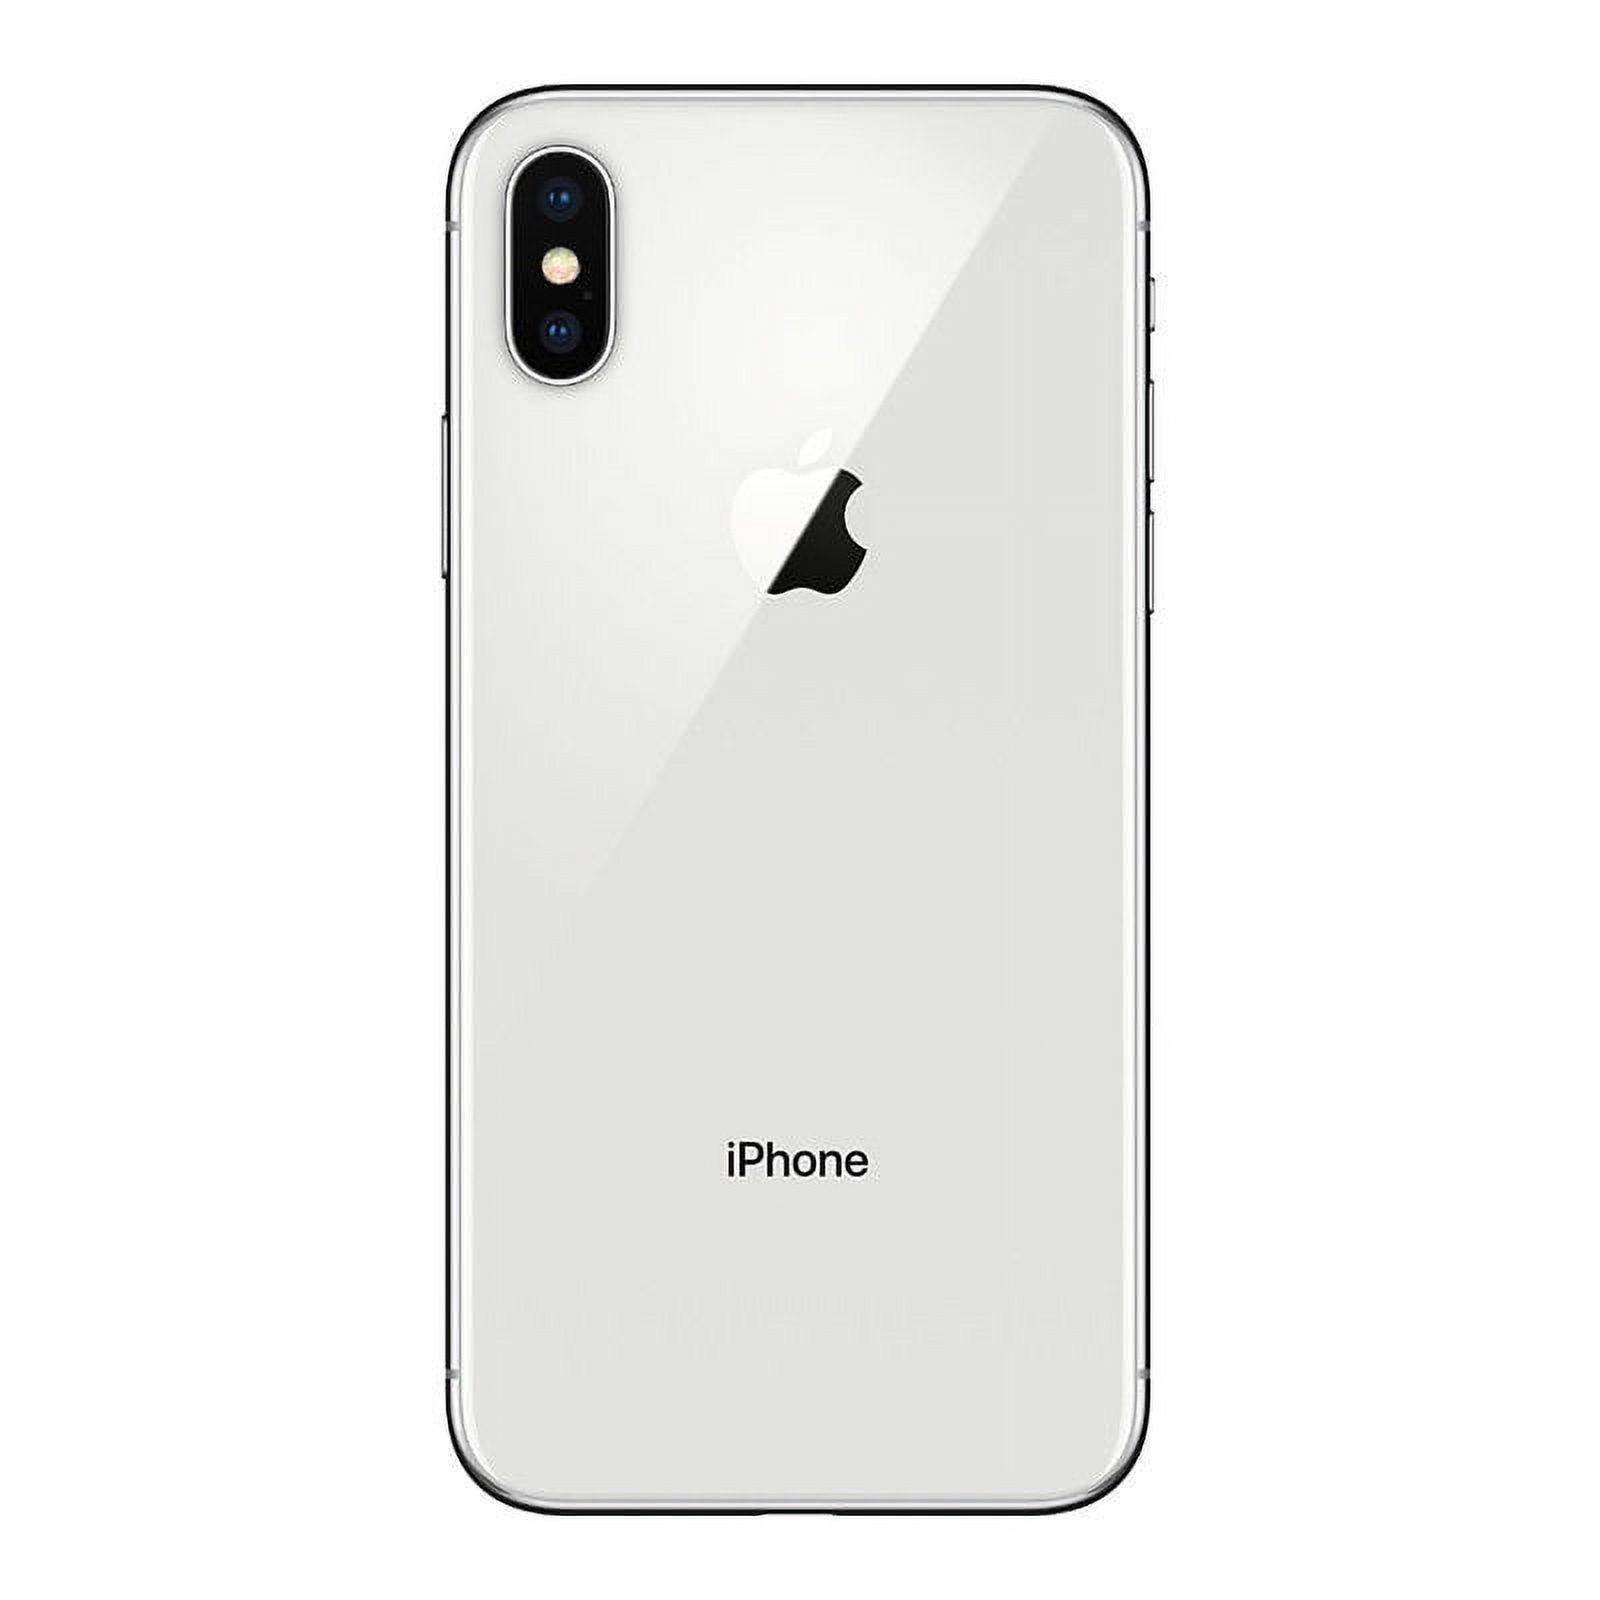 Restored Apple iPhone X 256GB Factory Unlocked Smartphone (Refurbished) - image 1 of 2